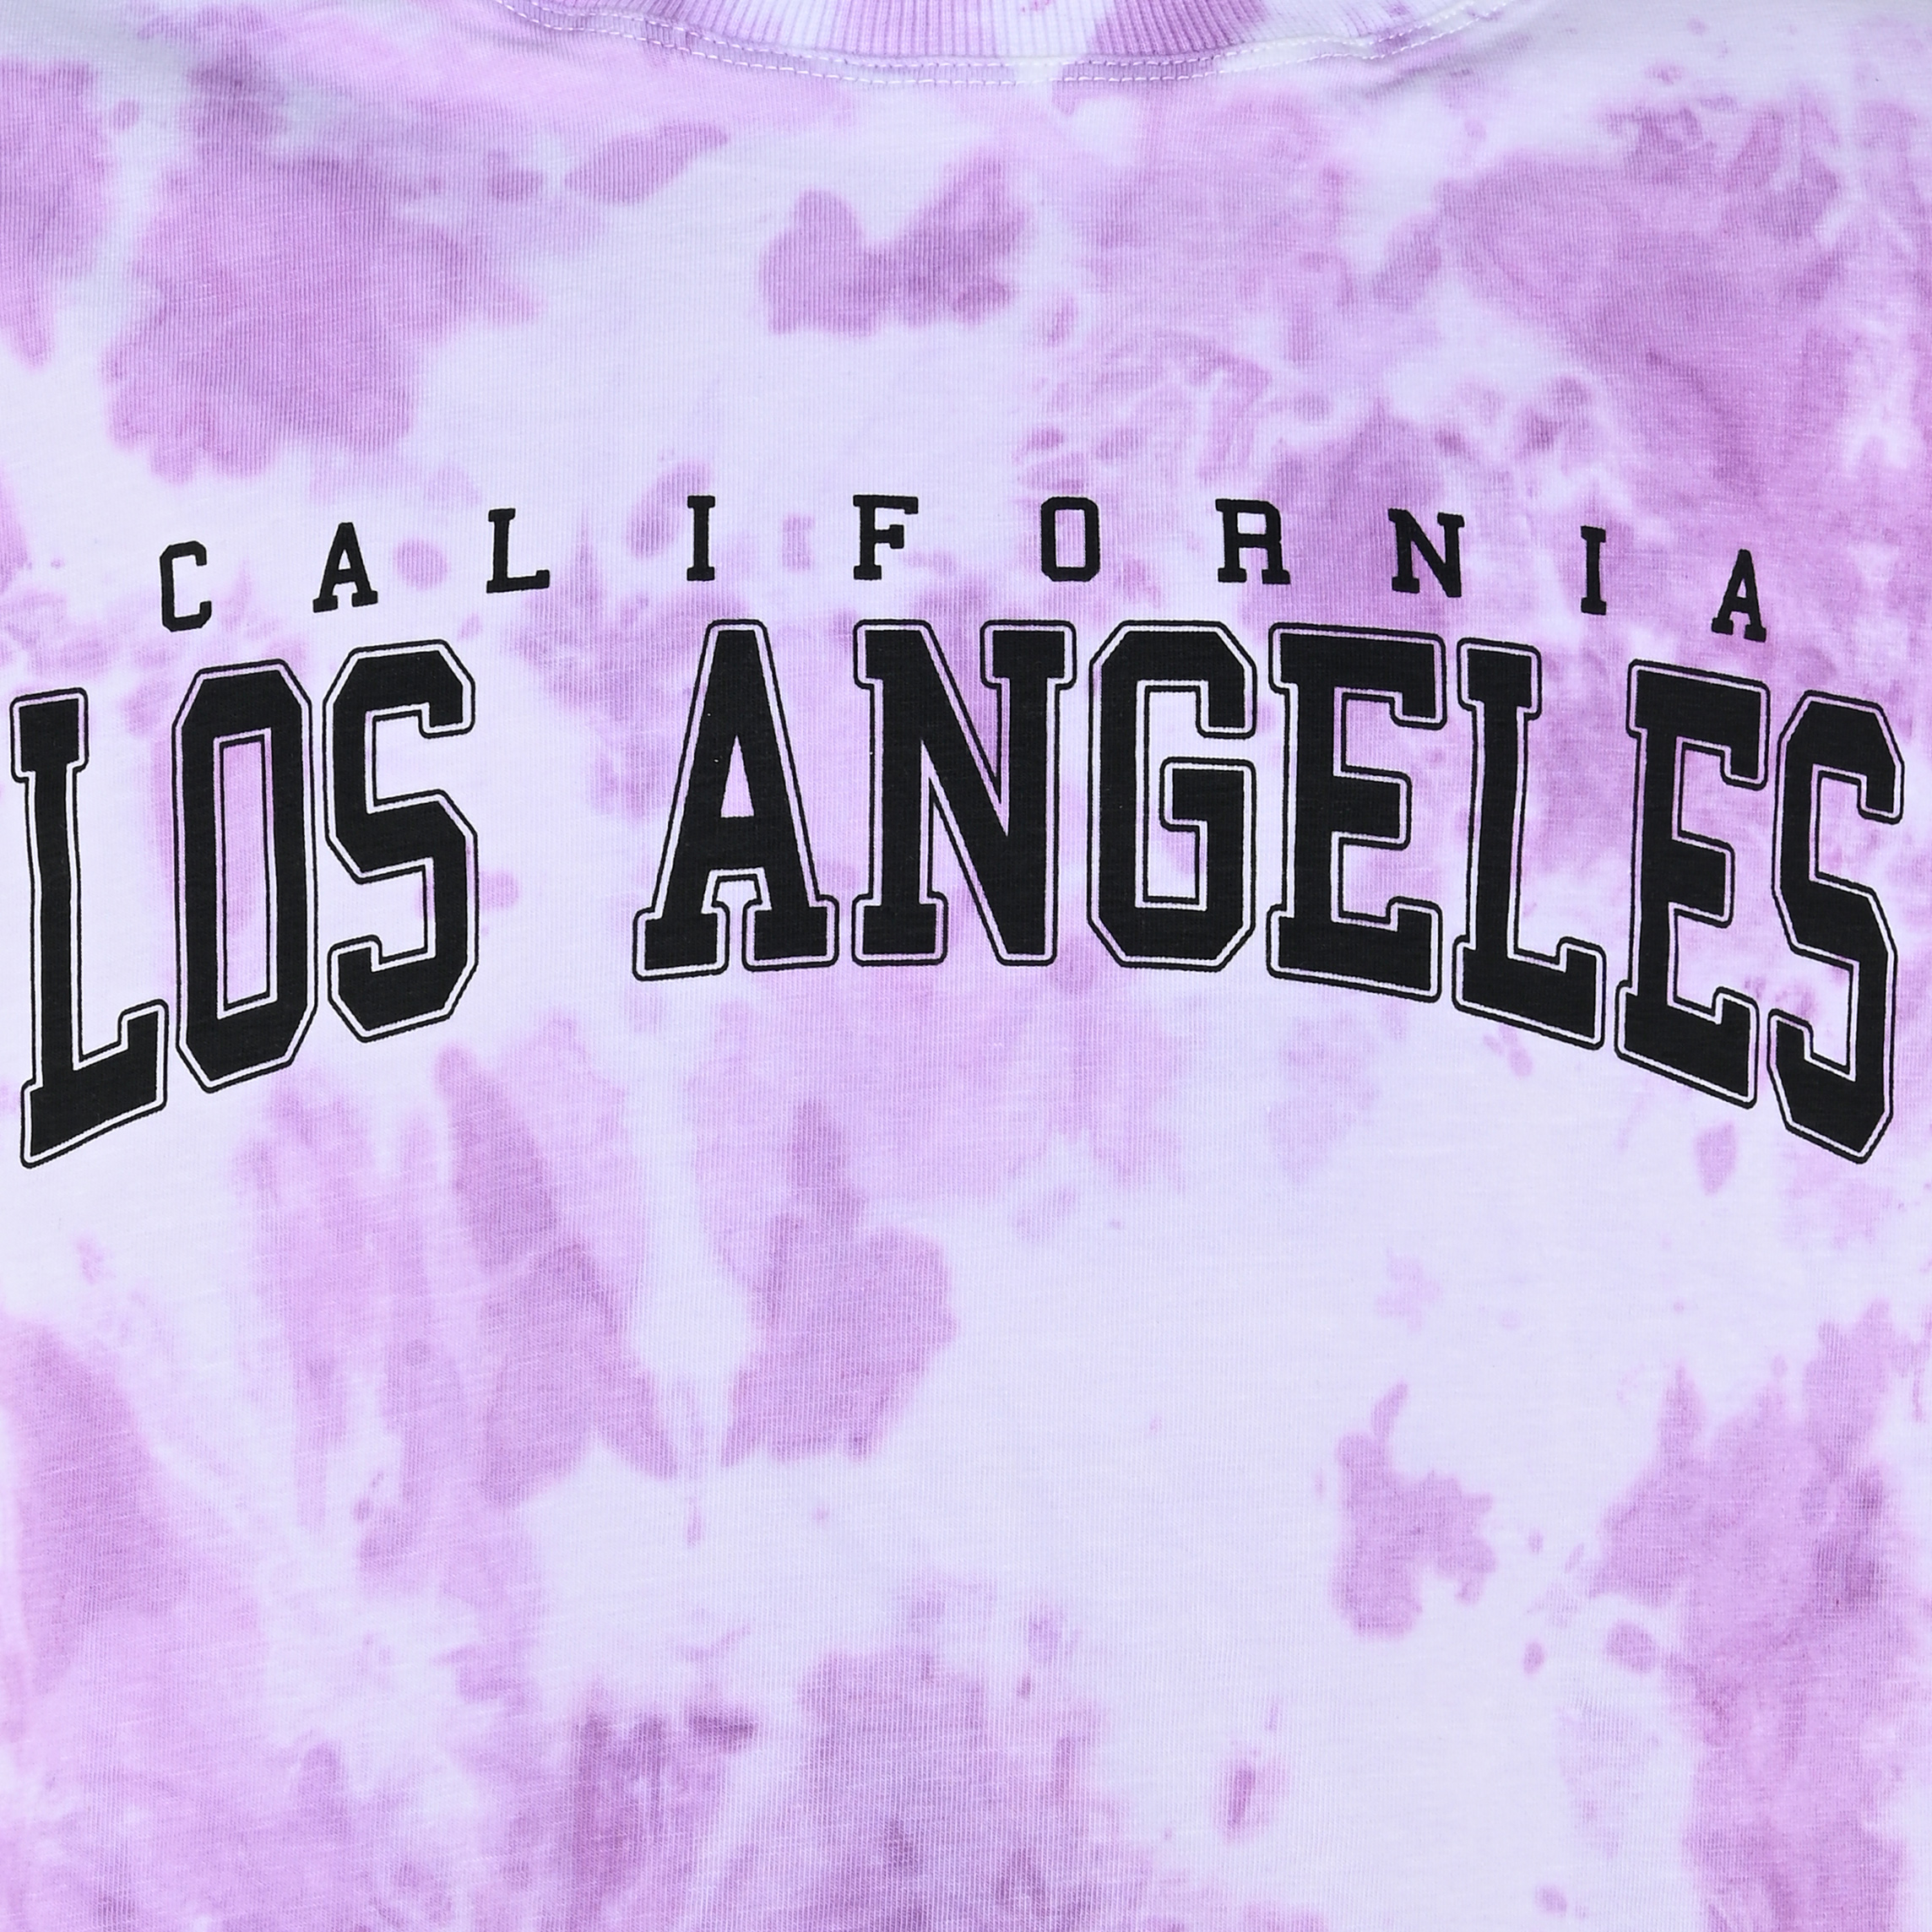 5729-Girls Boxy T-Shirt -Los Angeles